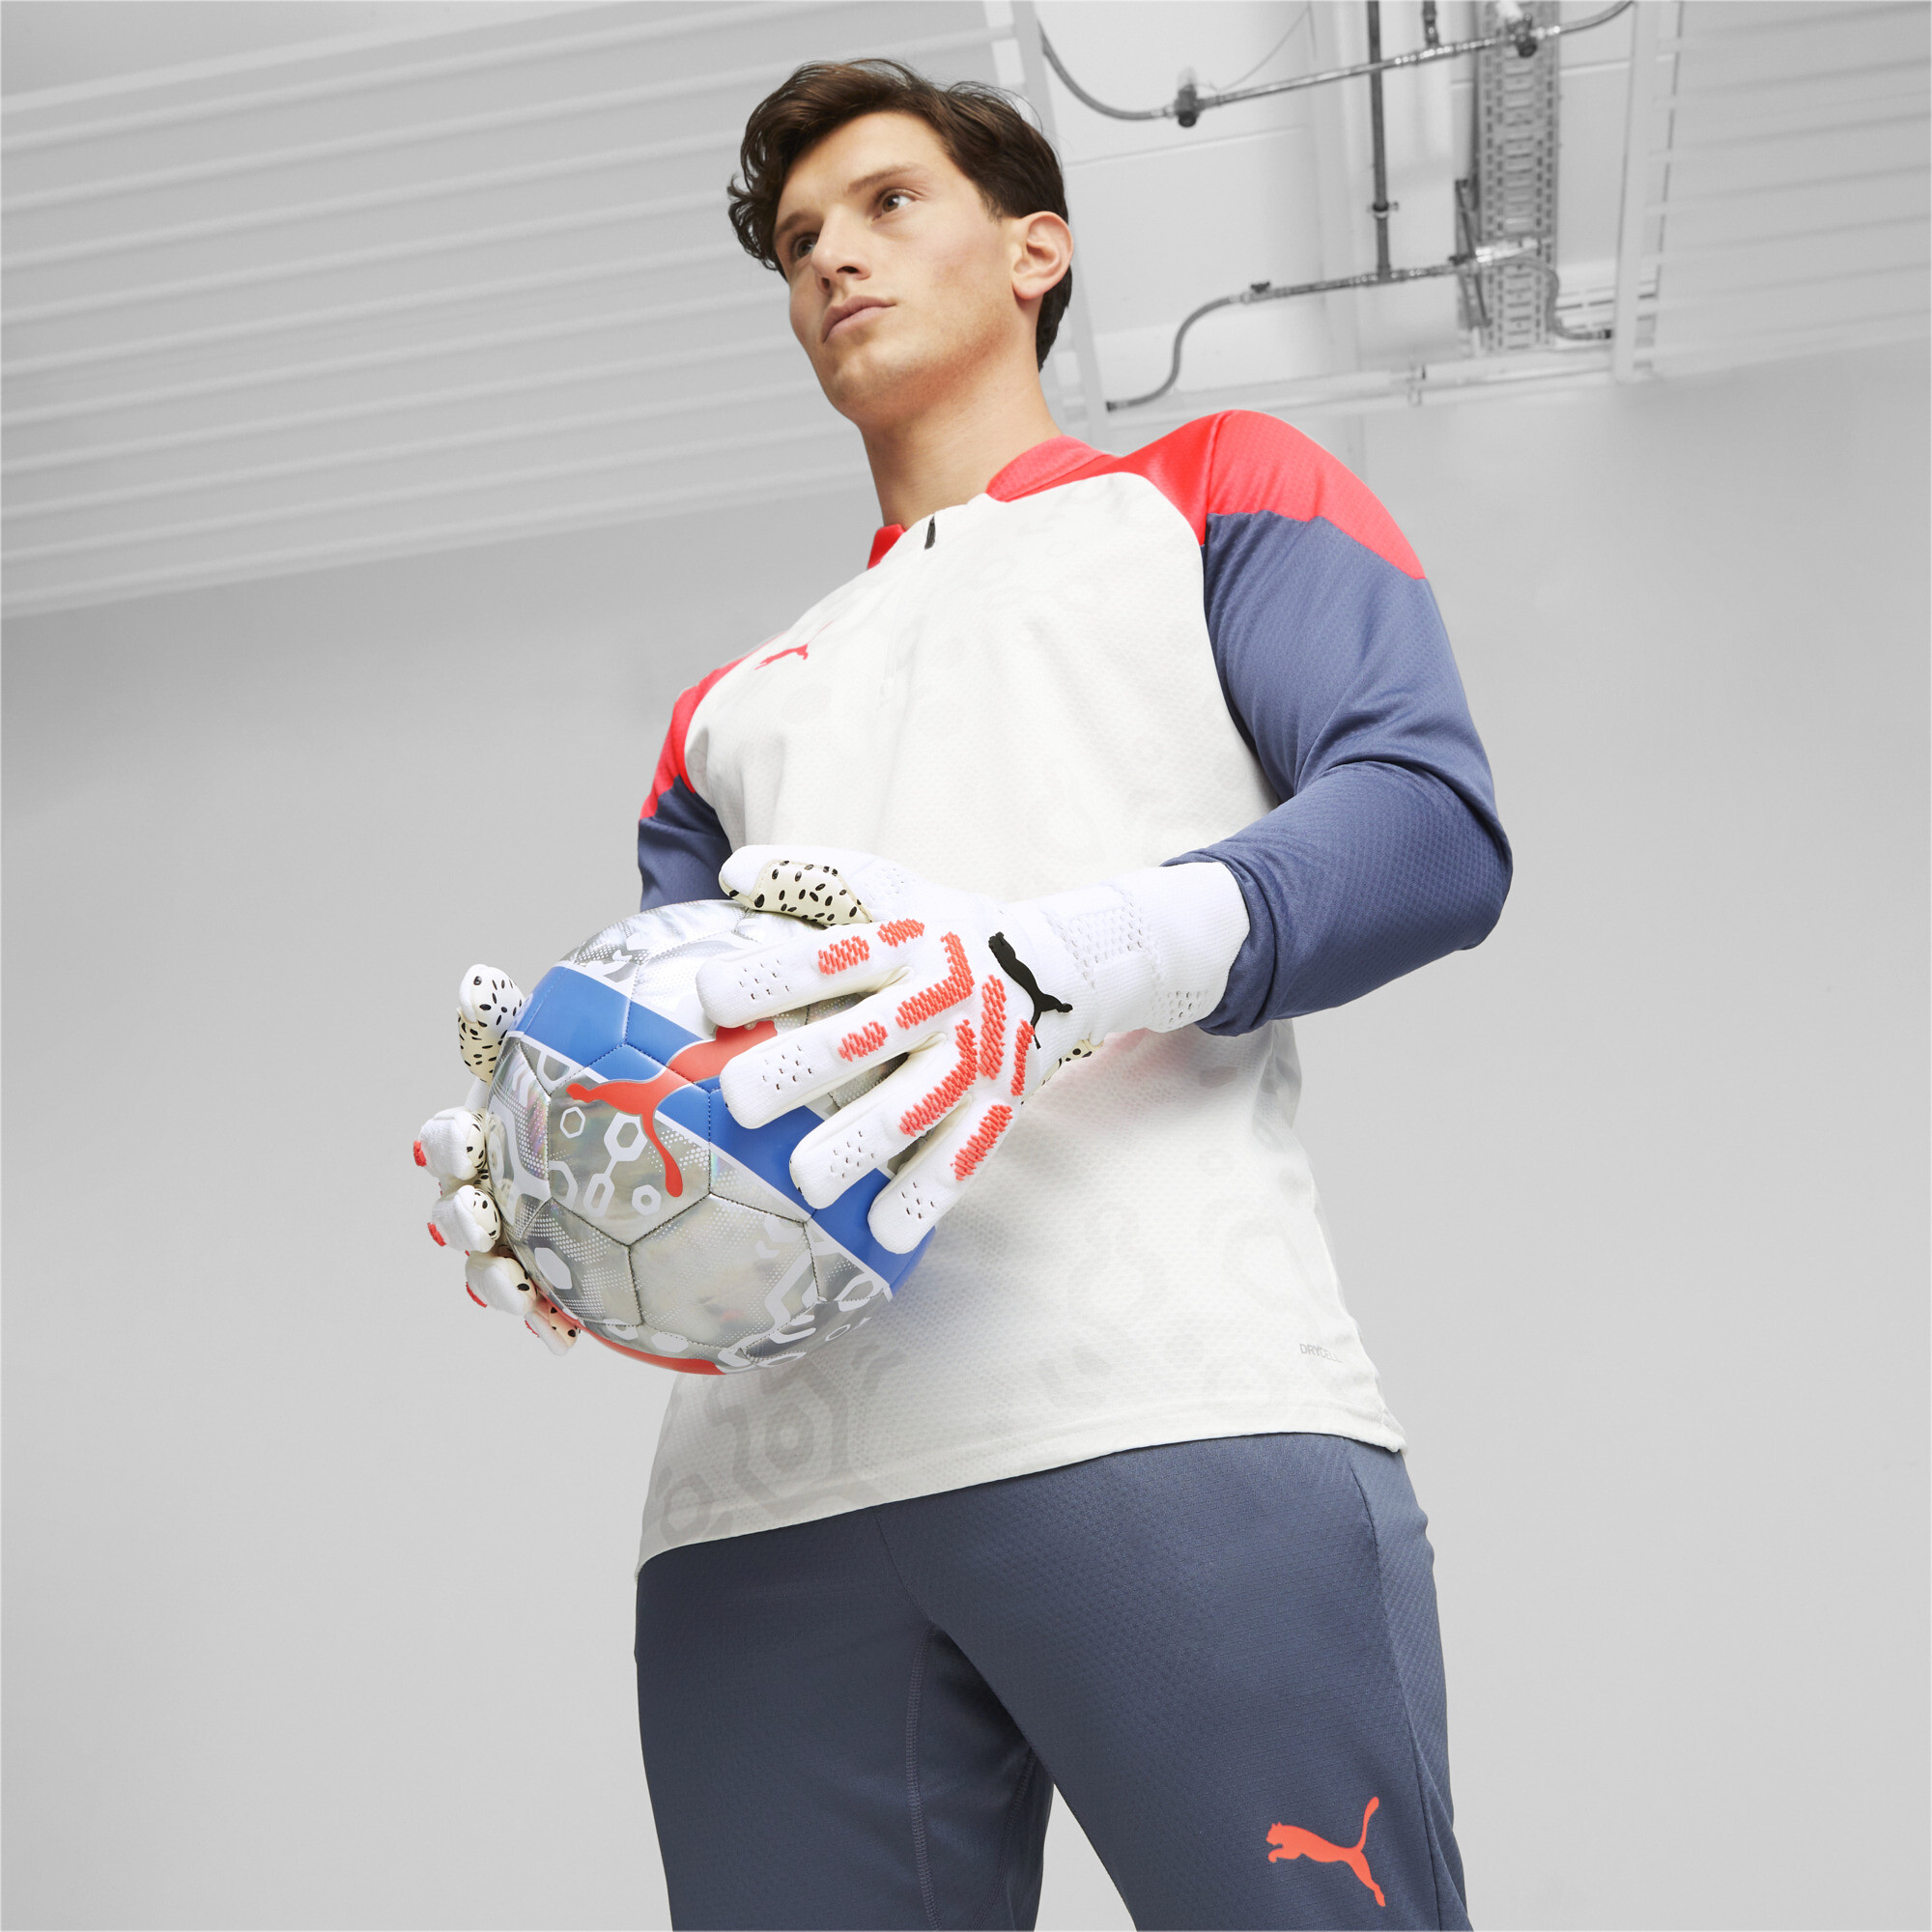 Men's Puma FUTURE Ultimate Negative Cut Football Goalkeeper Gloves, White, Size 11, Accessories